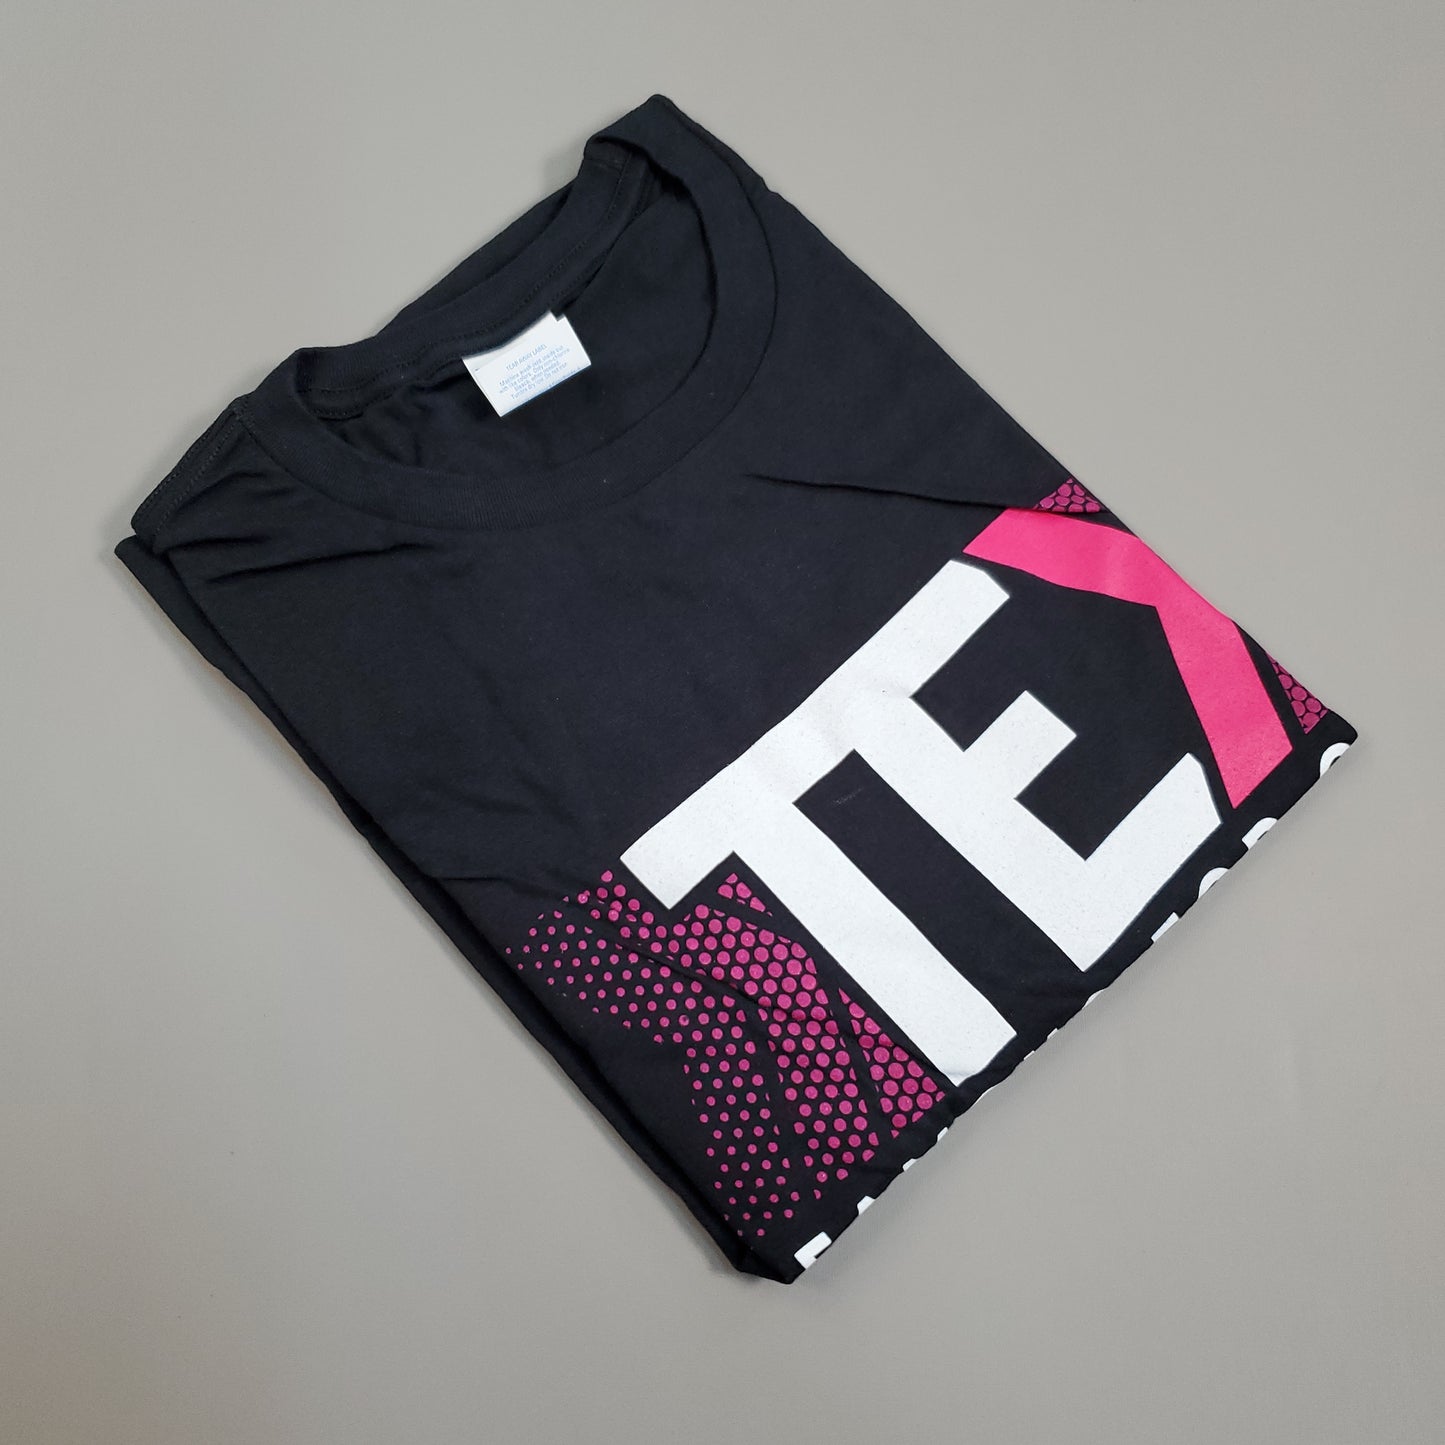 T-MOBILE Tee Shirt Short Sleeve TEX Famous For Care Men's Unisex Sz M Black/Pink (New)